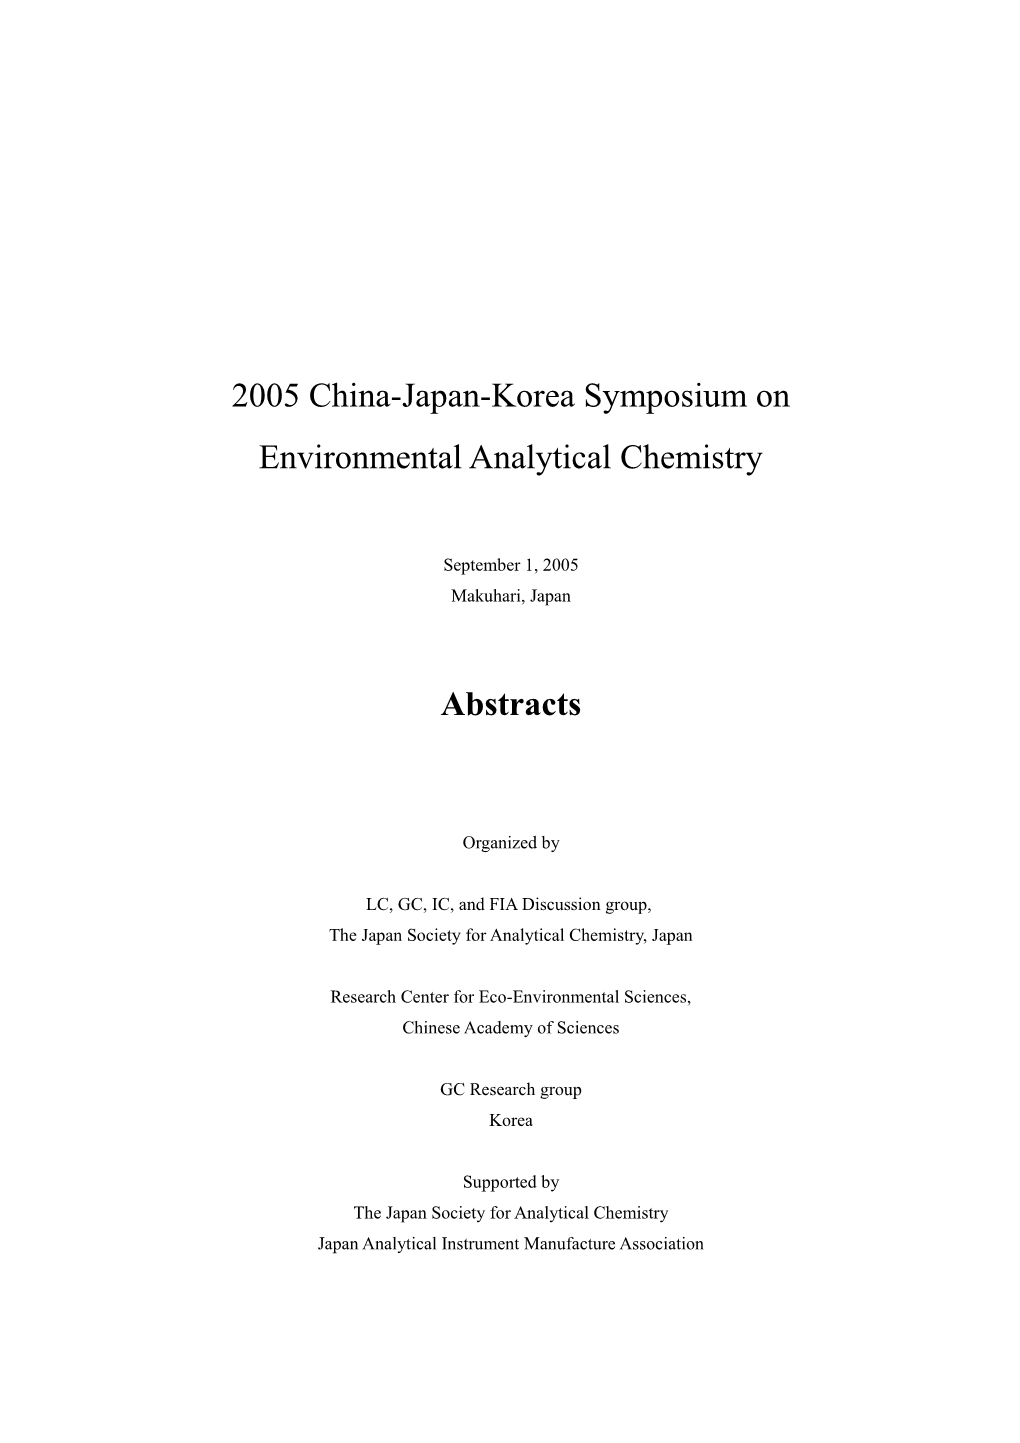 Reference and History of China-Japan-Korea Symposium On